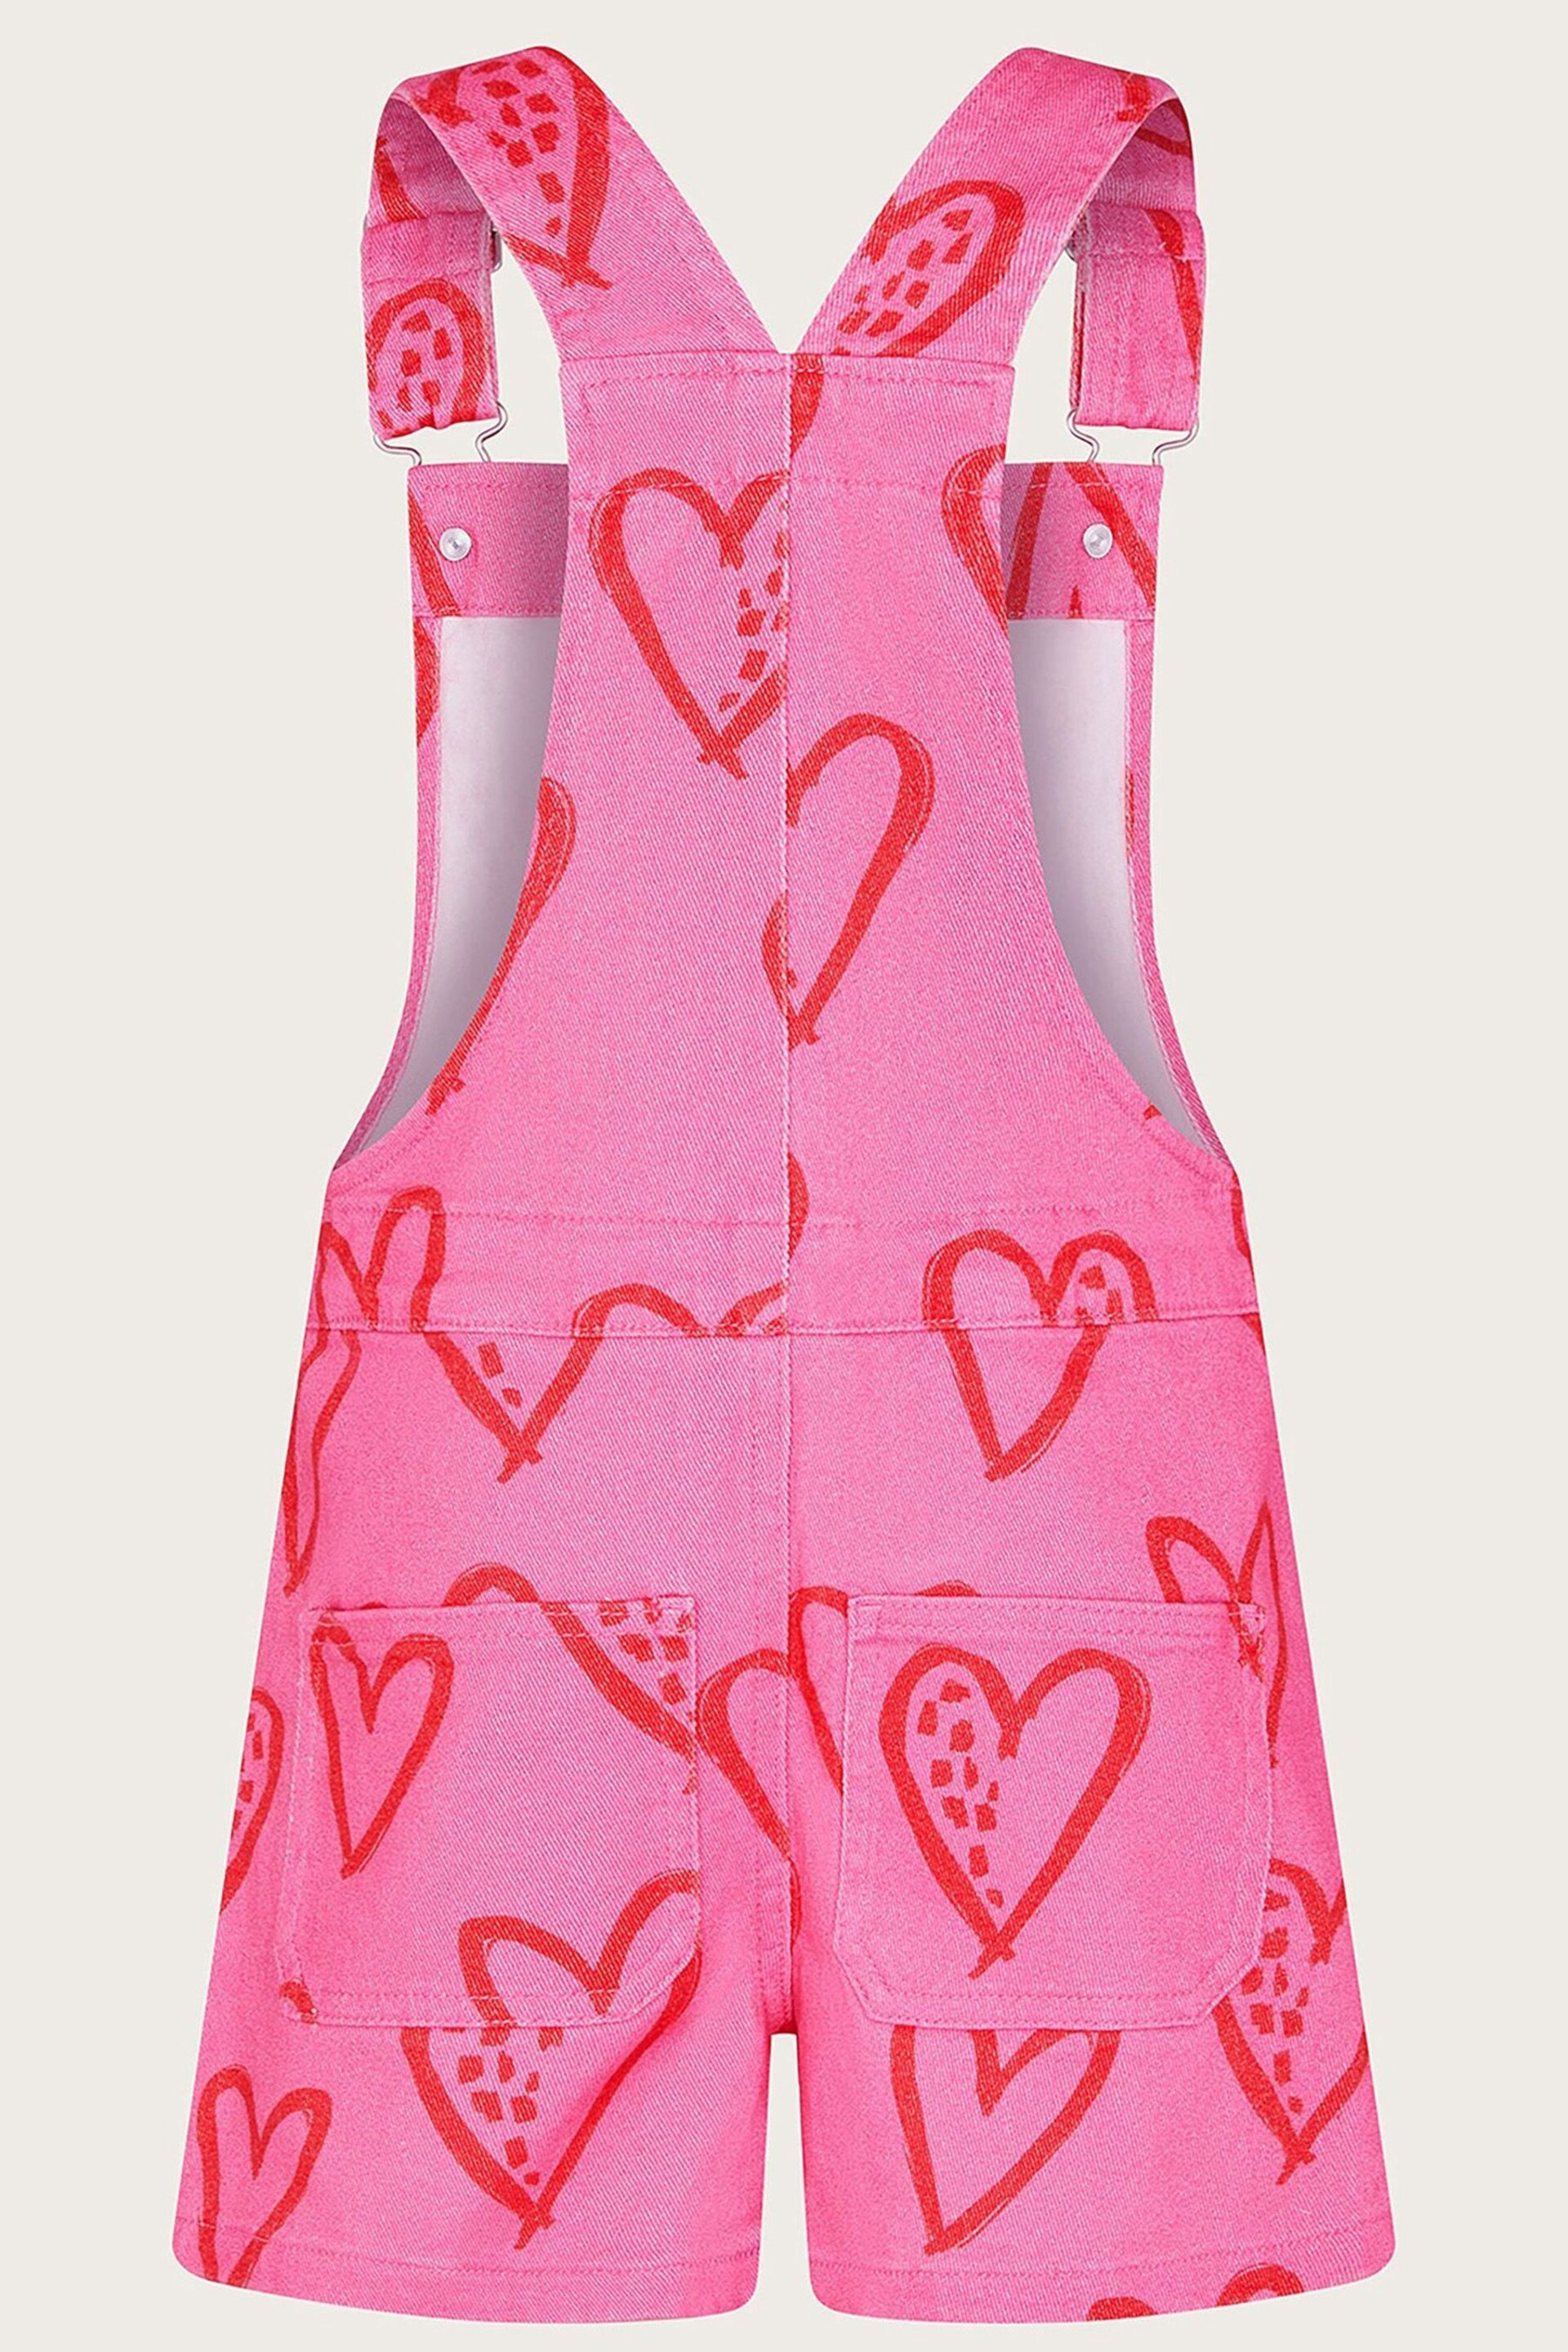 Monsoon Pink Heart Print Denim Dungarees - Image 2 of 3